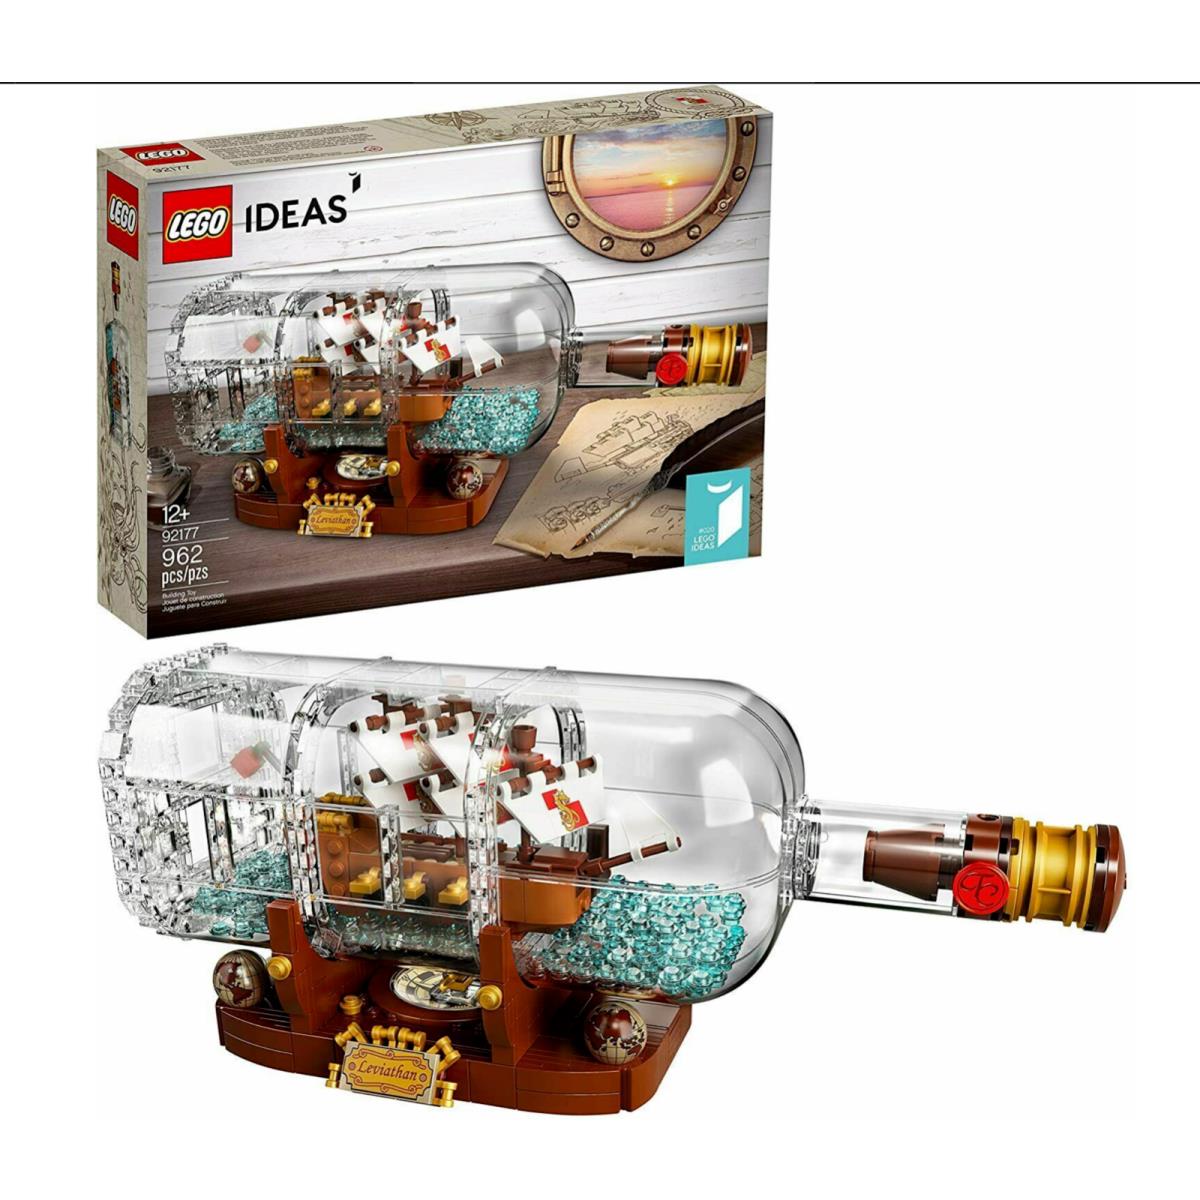 Lego Ideas Ship in a Bottle 92177 Retired Gift Set